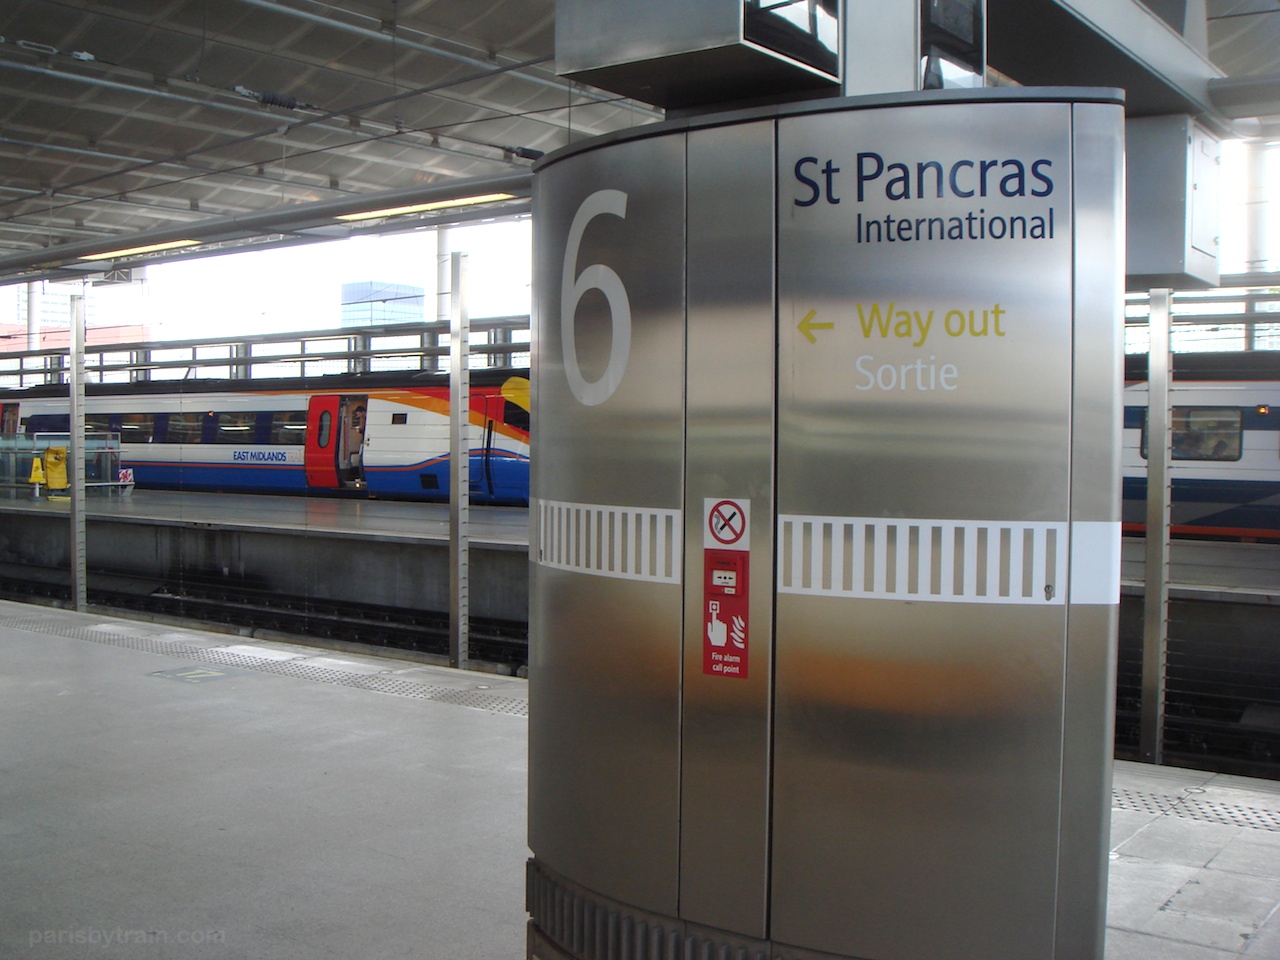 Eurostar station at St. Pancras signpost